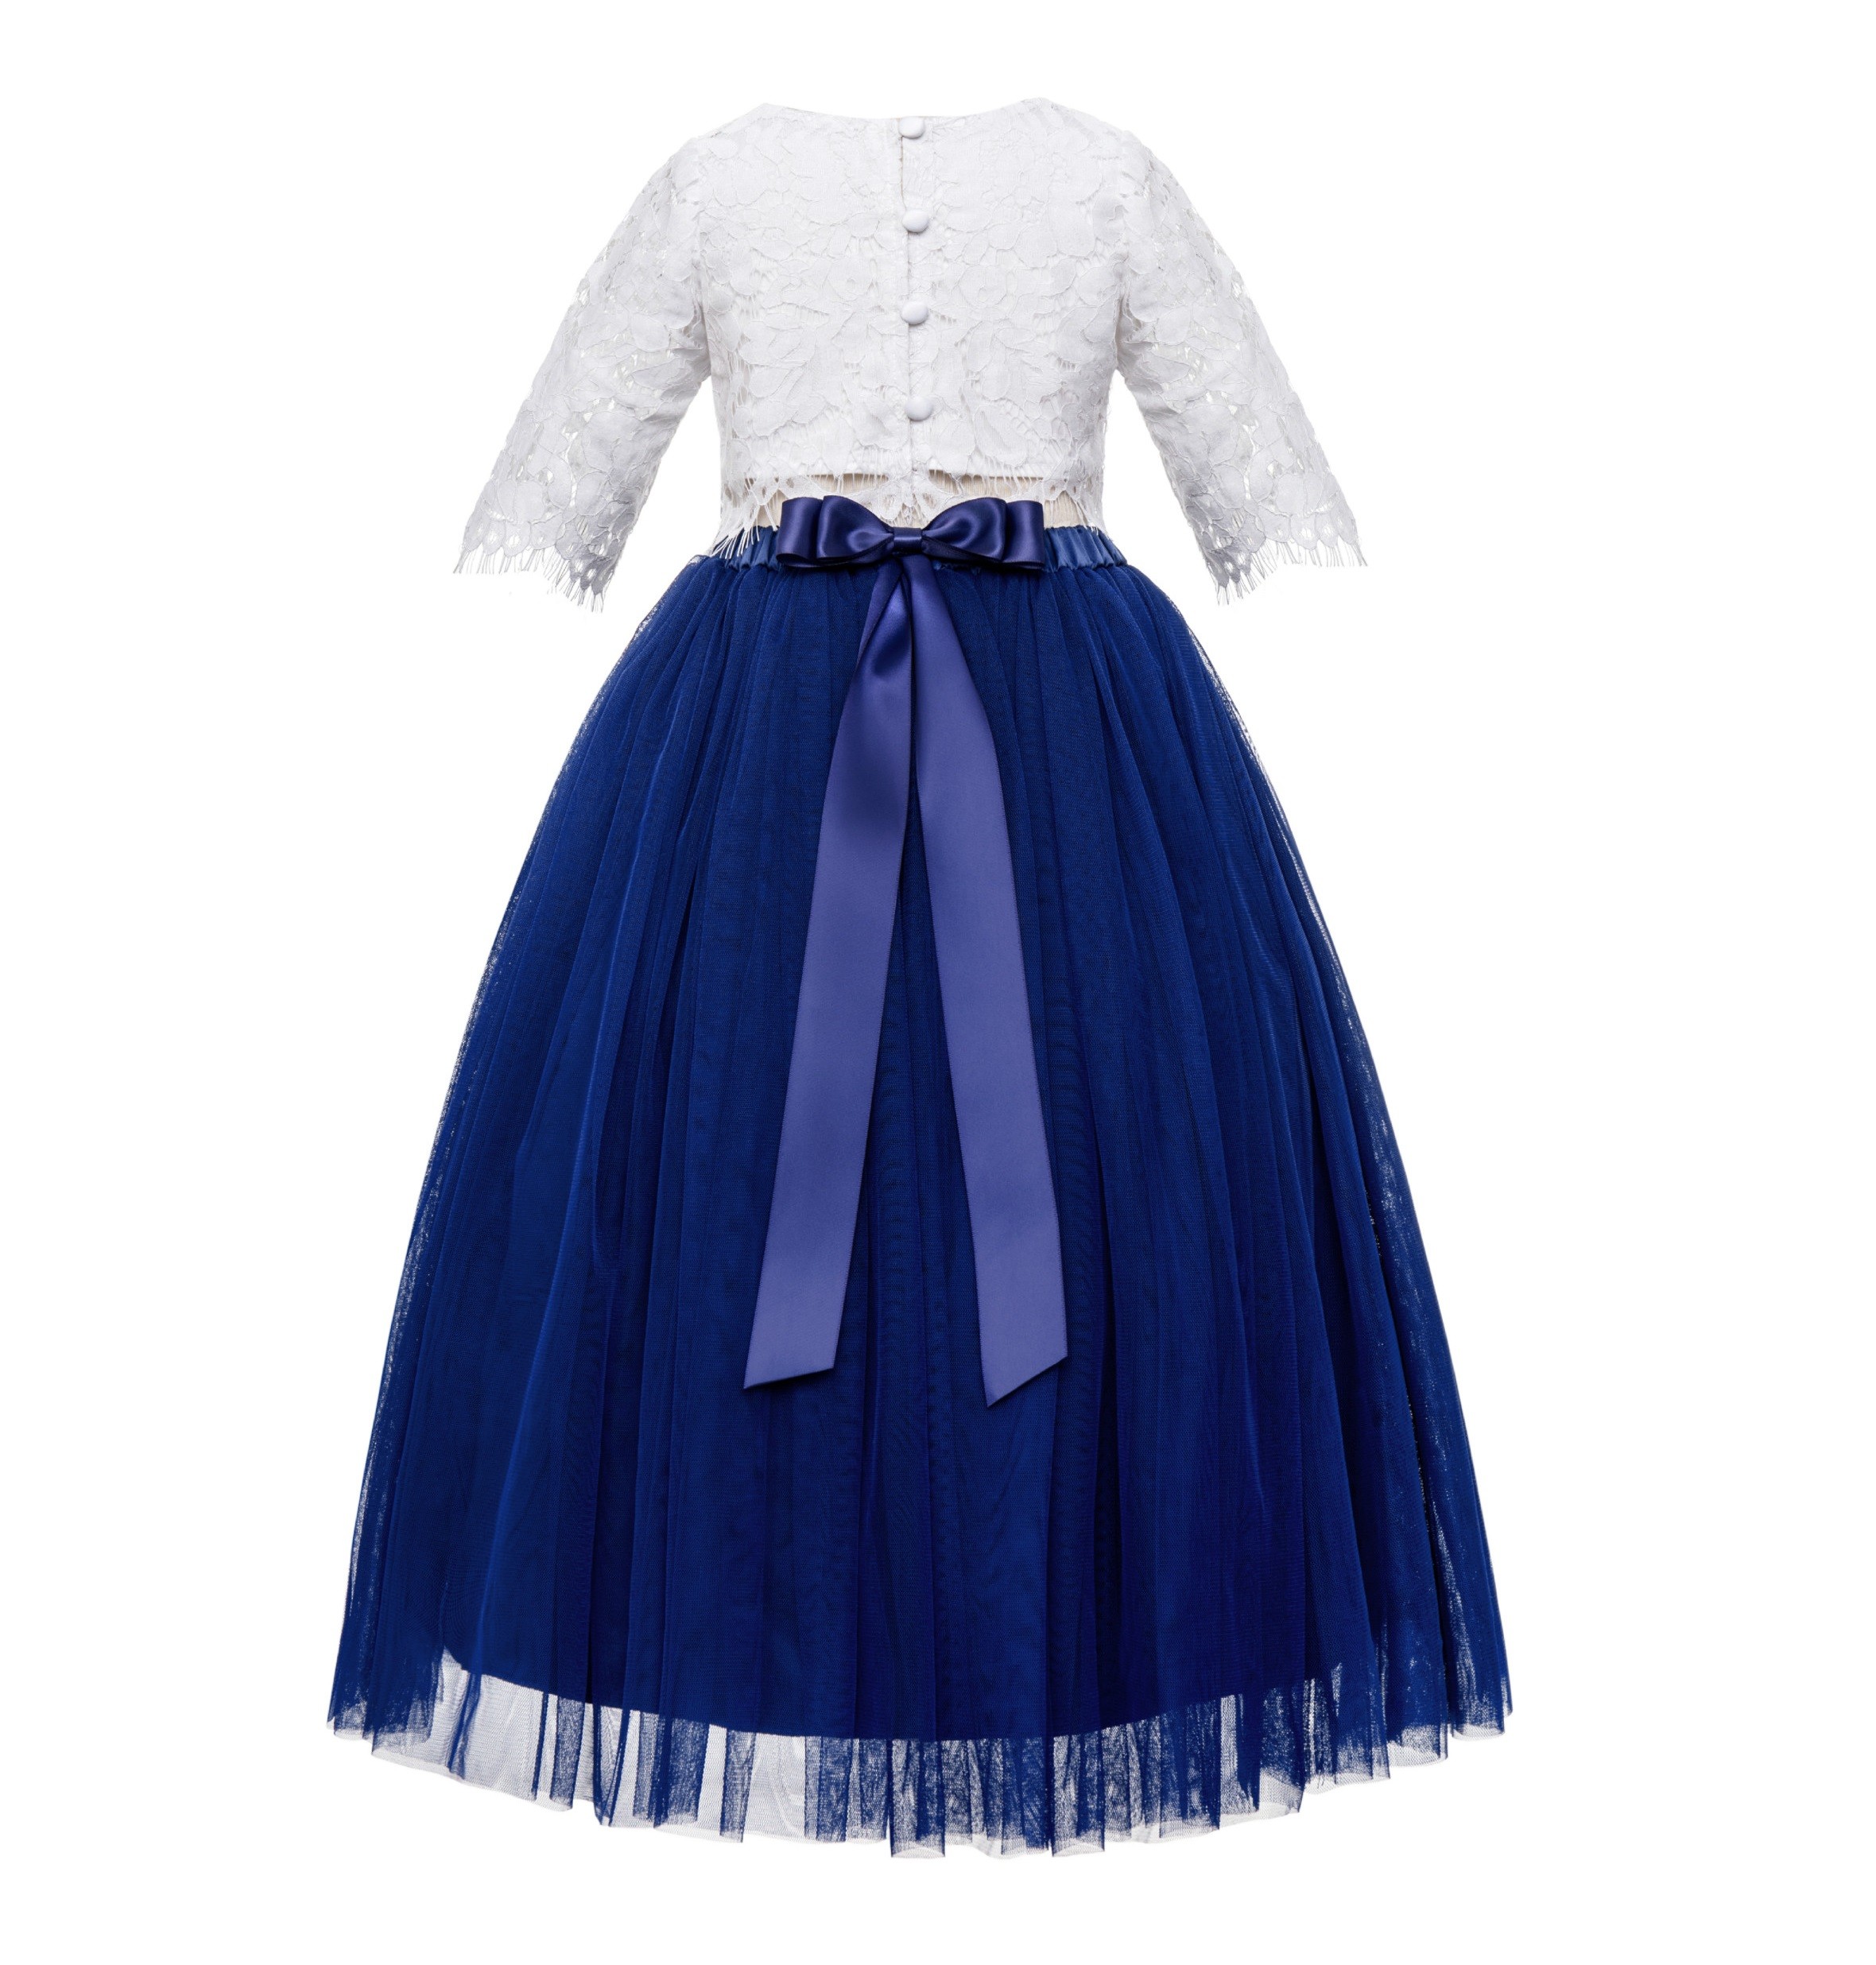 Navy Blue Eyelash Lace Flower Girl Dress A-Line Tulle Dress LG5